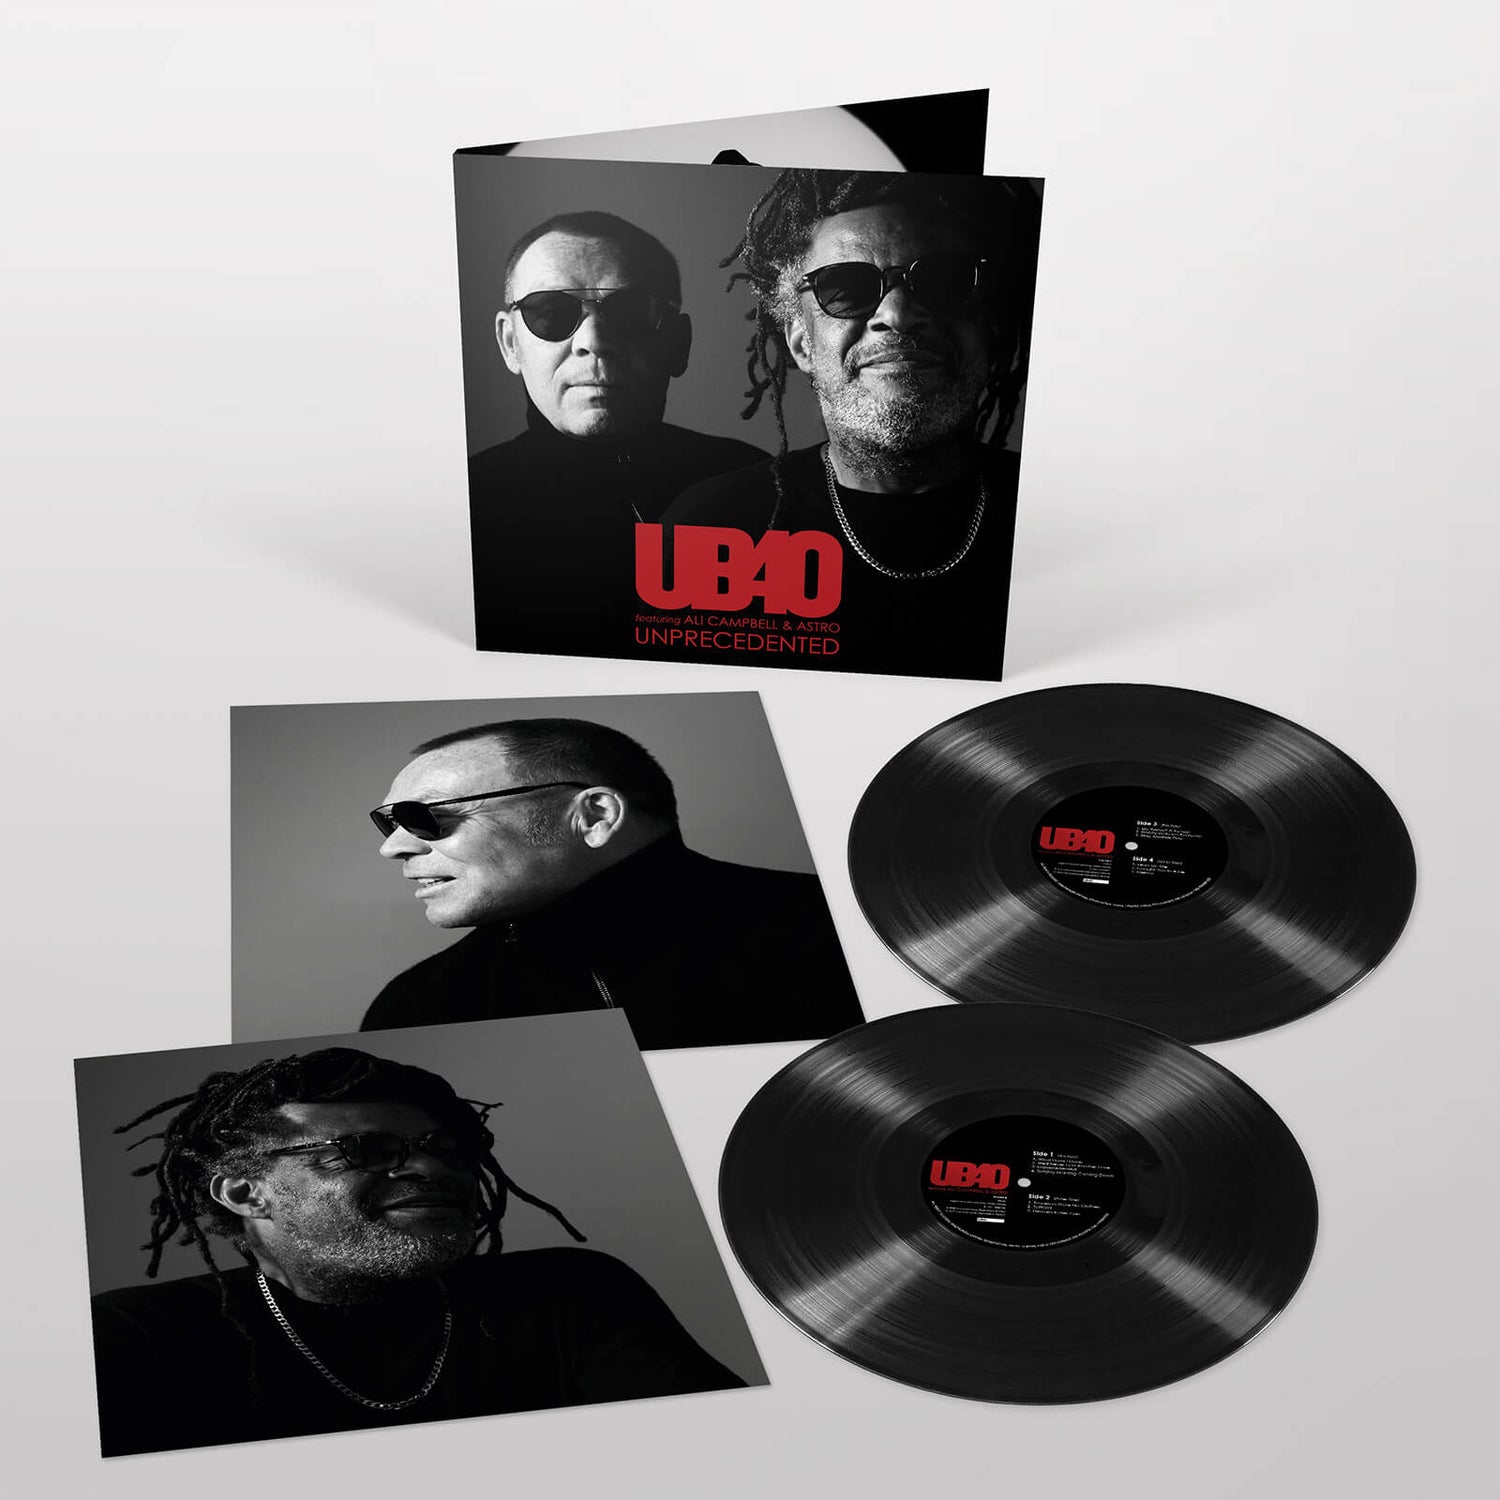 UB40 featuring Ali Campbell & Astro - Unprecedented Vinyl 2LP